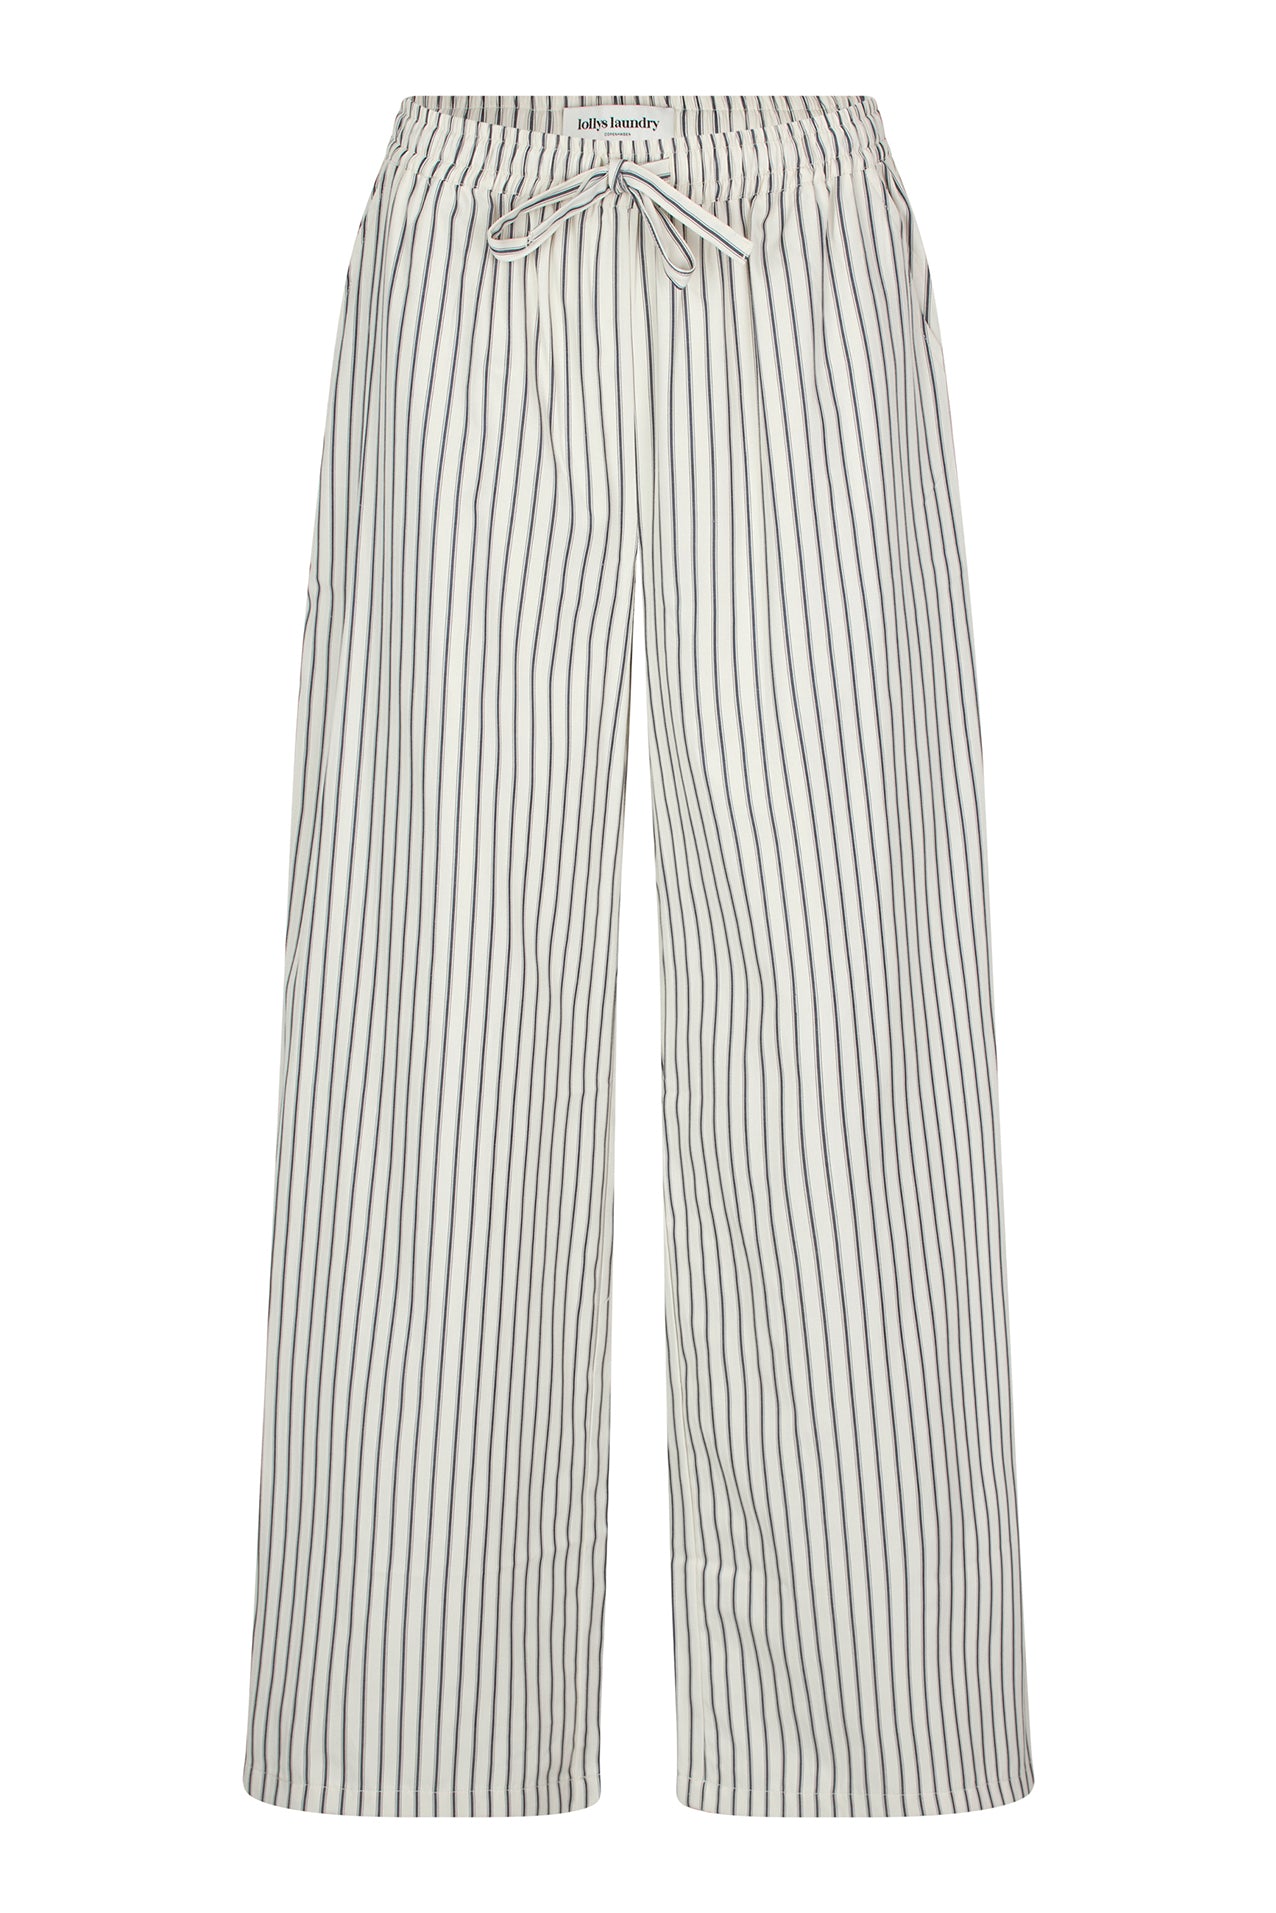 Lollys Laundry RitaLL Pants Pants 80 Stripe